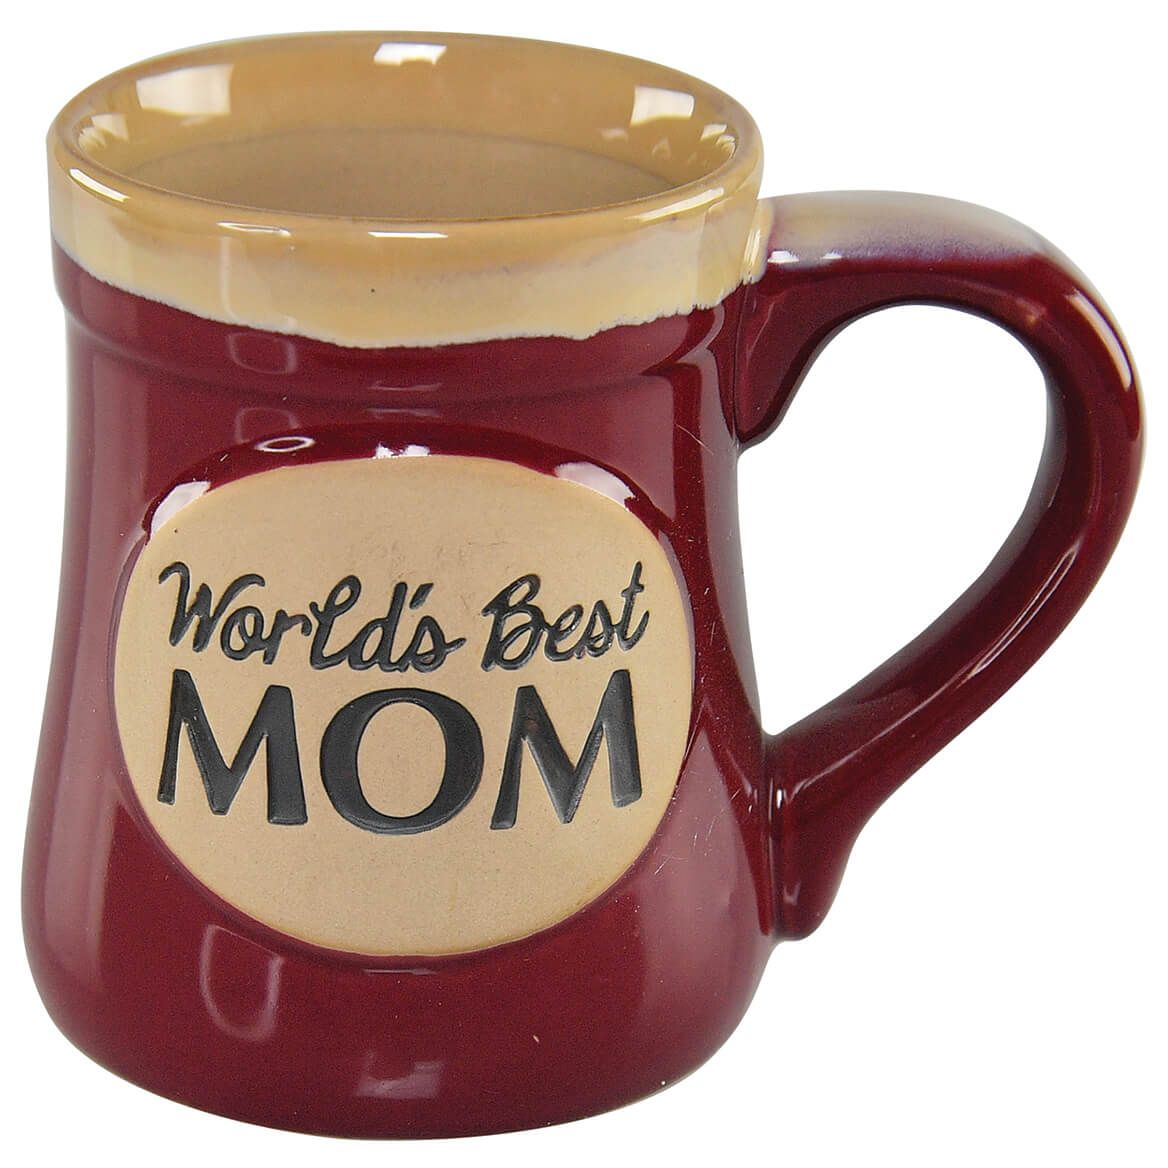 World's Best Mom Red Stoneware Mug + '-' + 376034